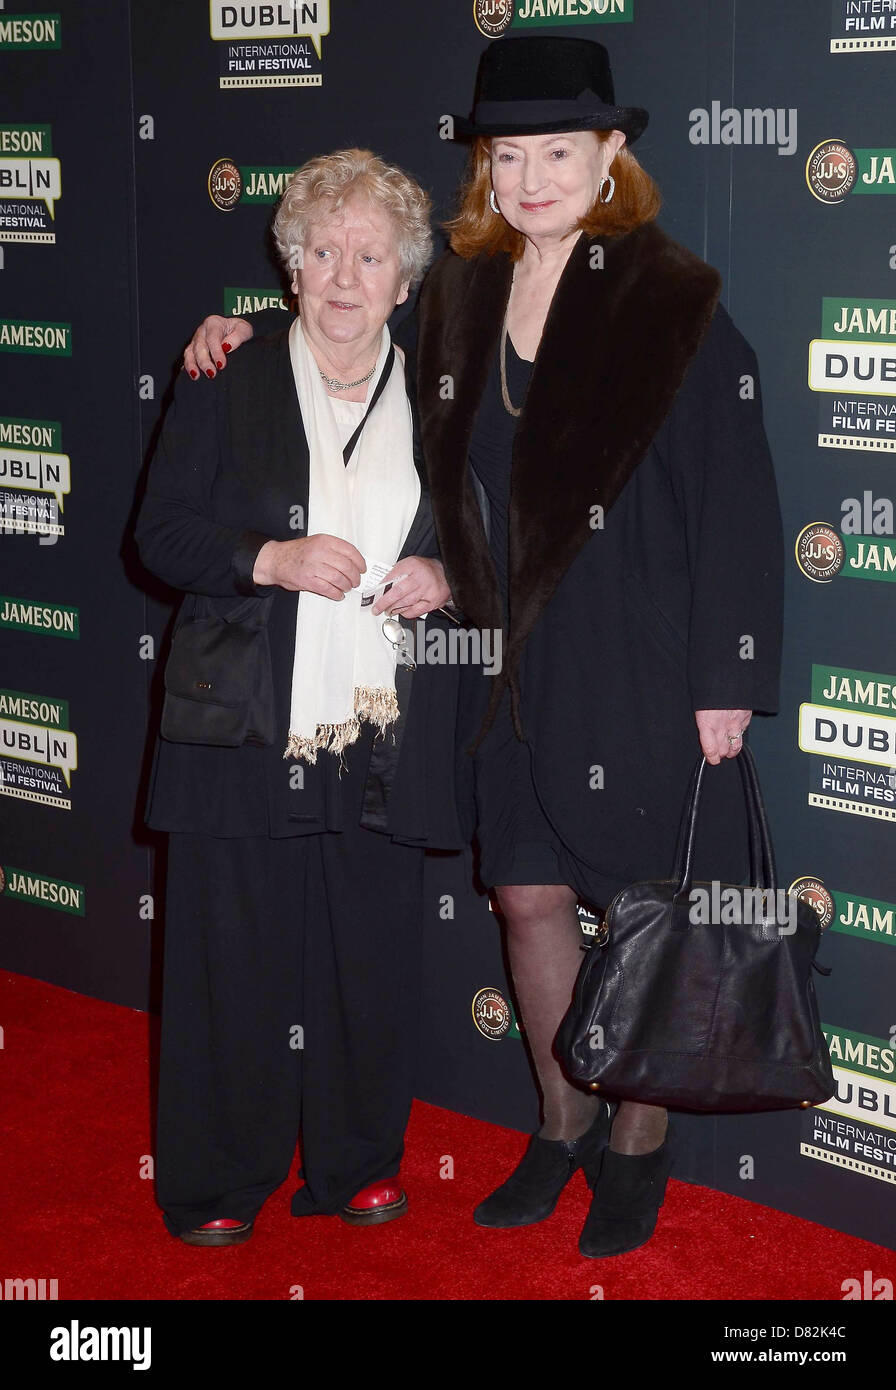 Nell McCafferty & guest Irish premiere of 'Cloudburst' at the Savoy Cinema - arrivals Dublin, Ireland - 16.02.12 Stock Photo